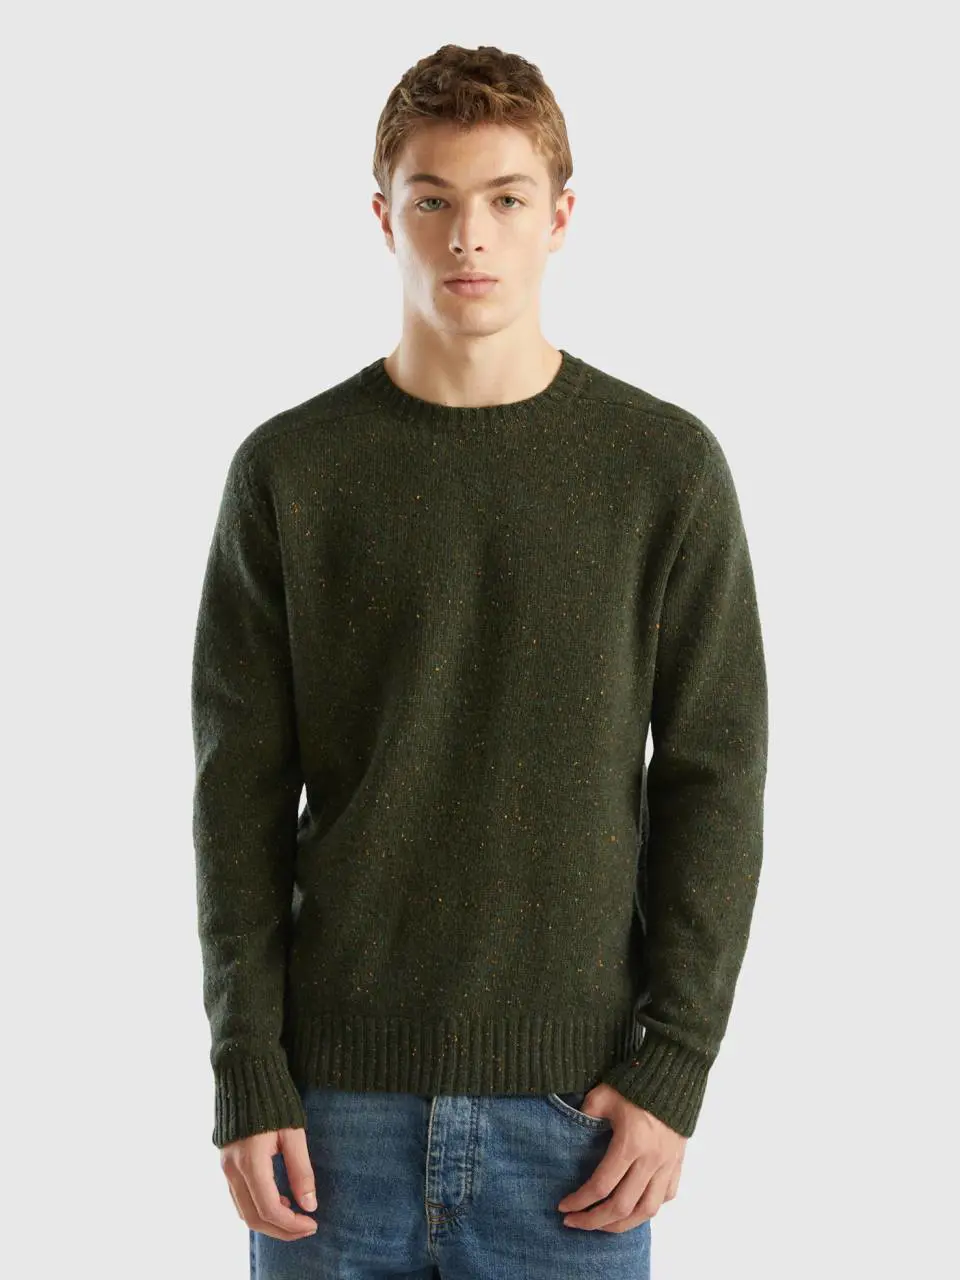 Benetton crew neck sweater in wool blend. 1